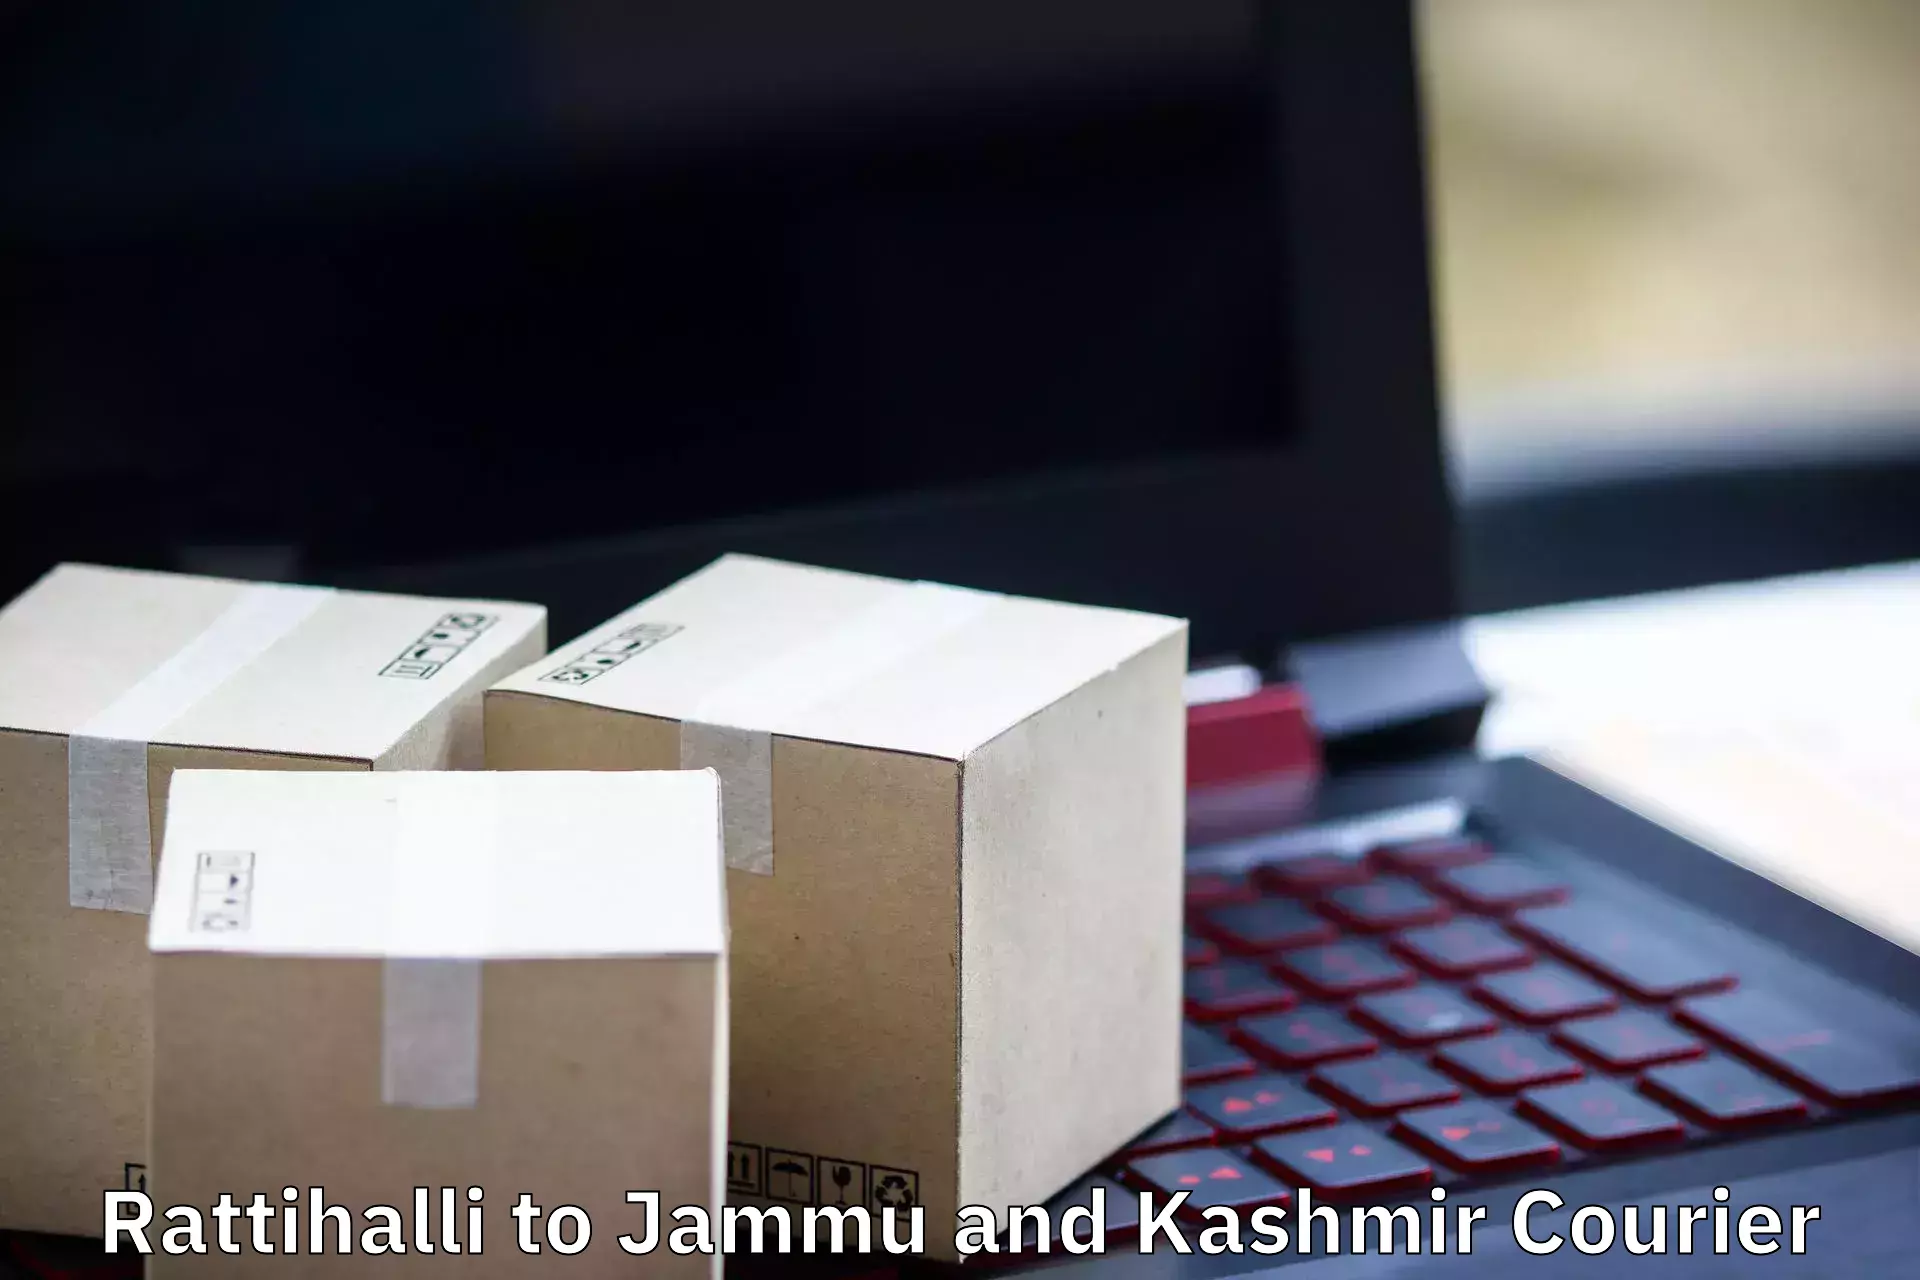 Home relocation experts Rattihalli to Srinagar Kashmir